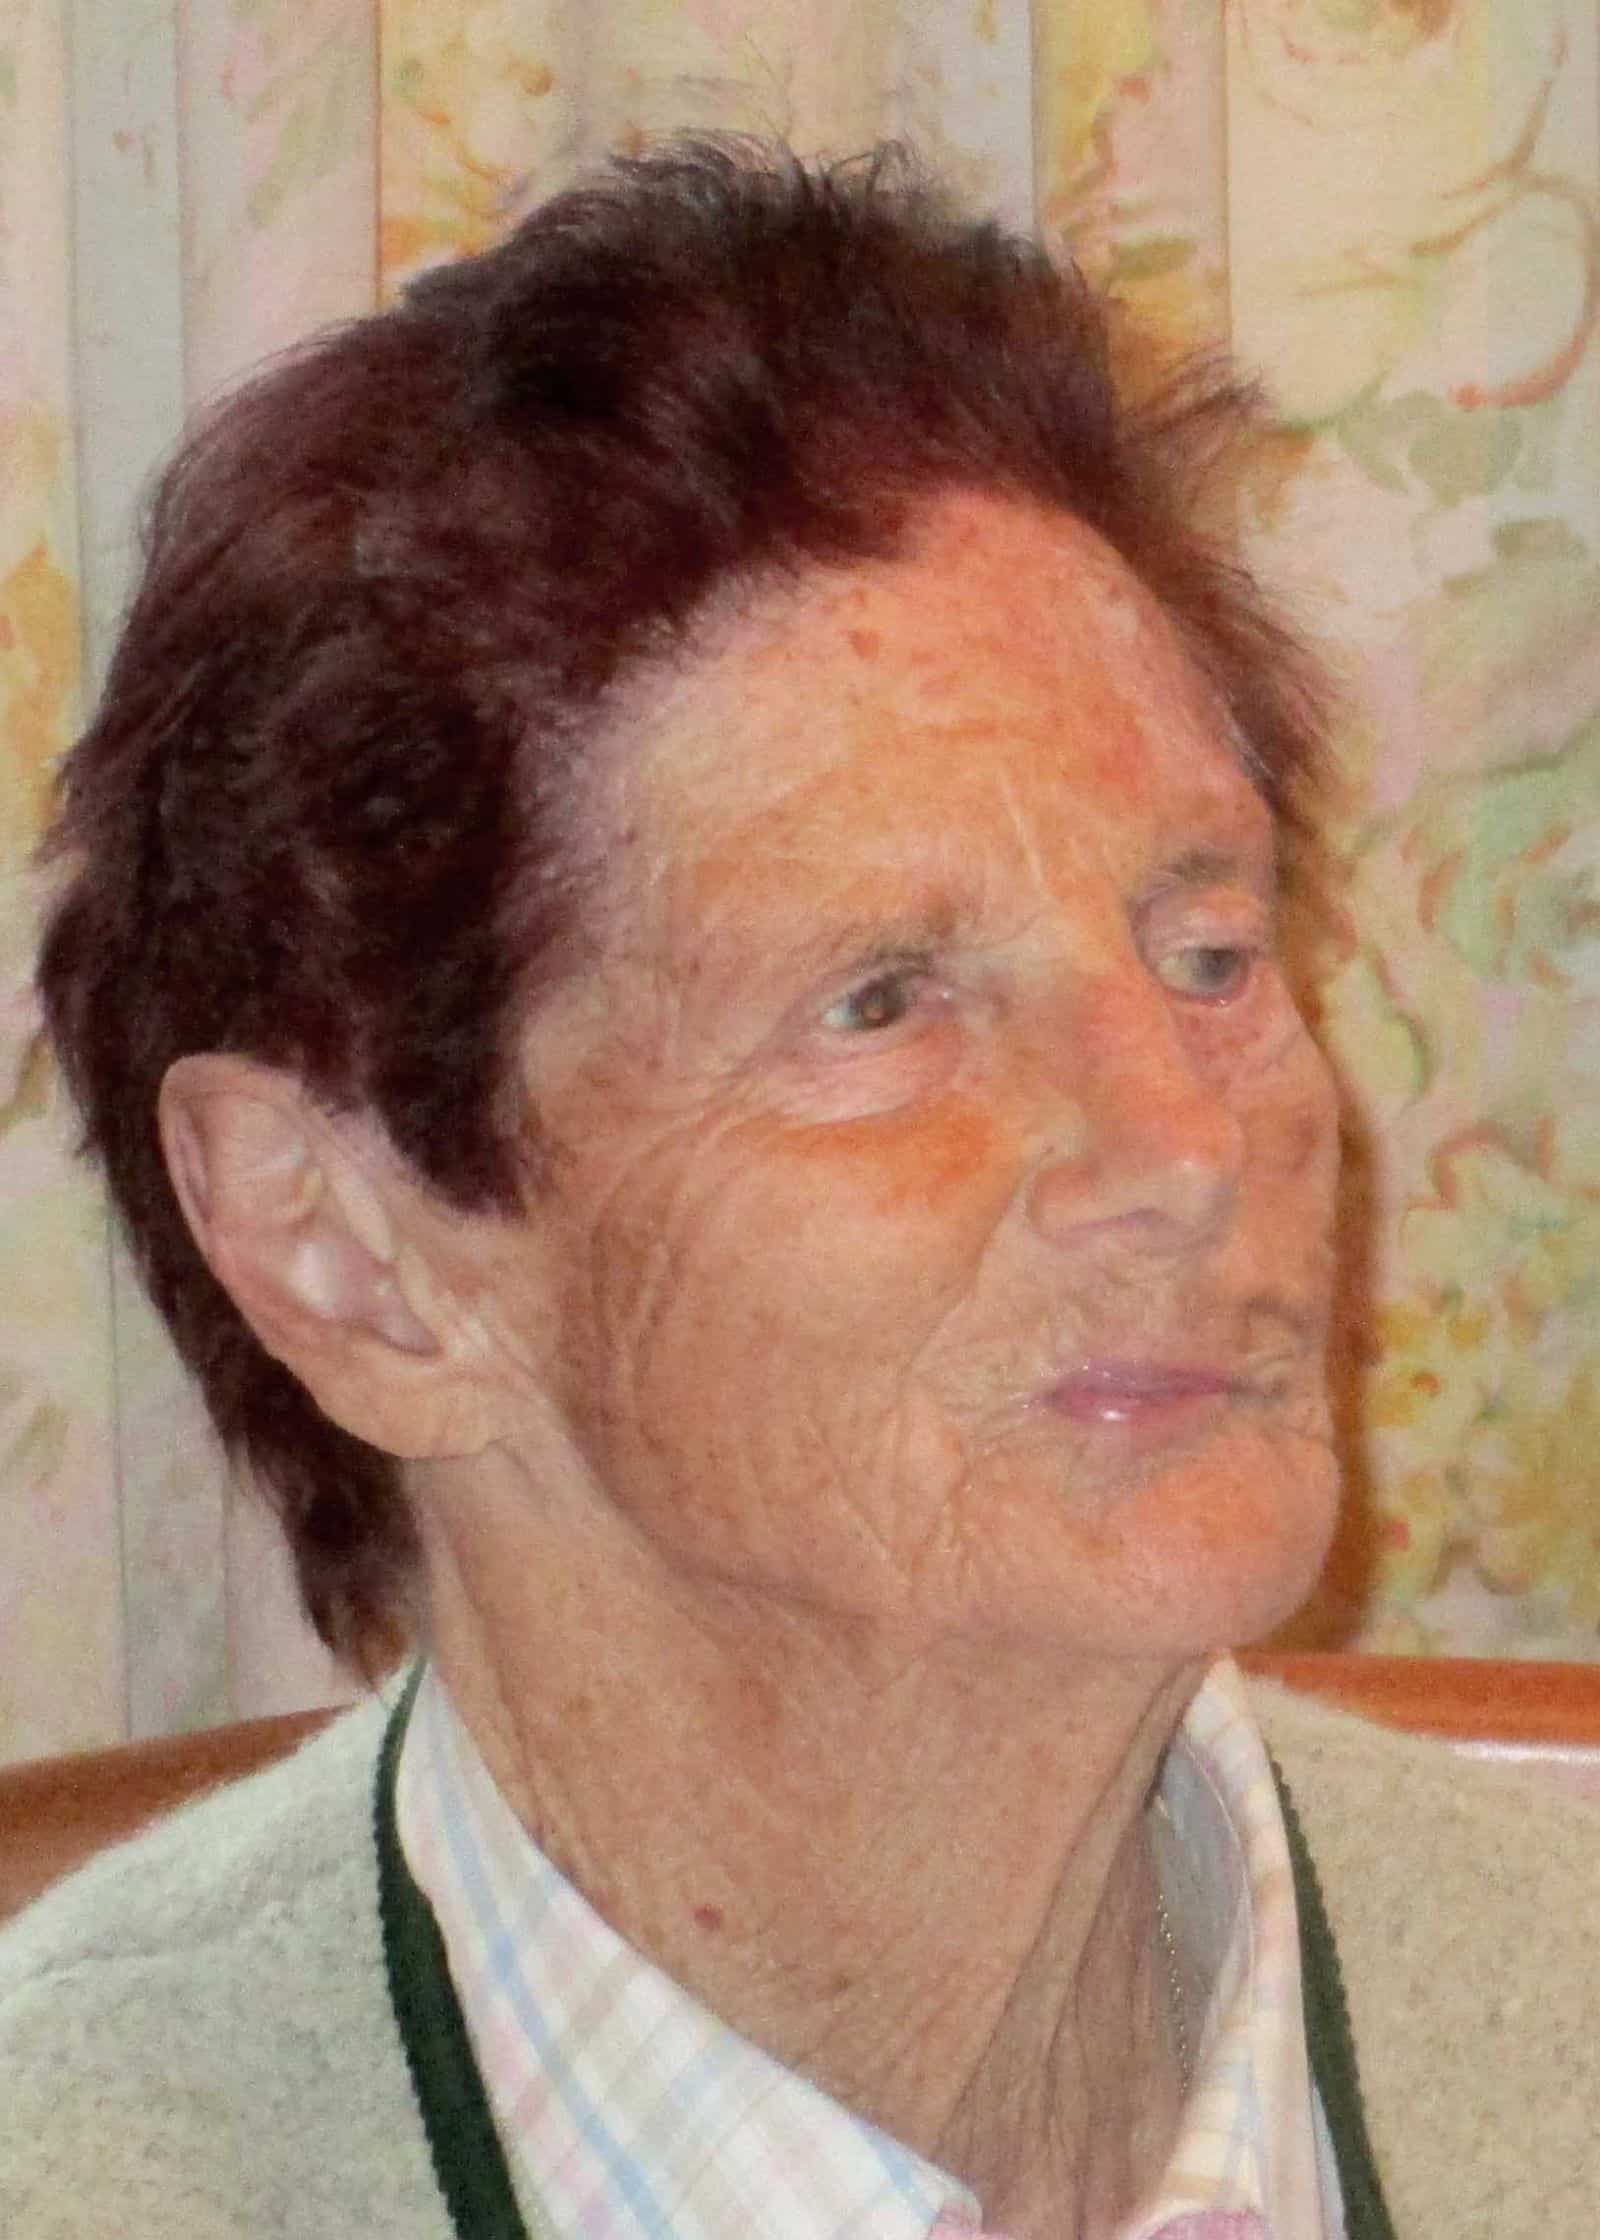 Margareta Kahofer (89)